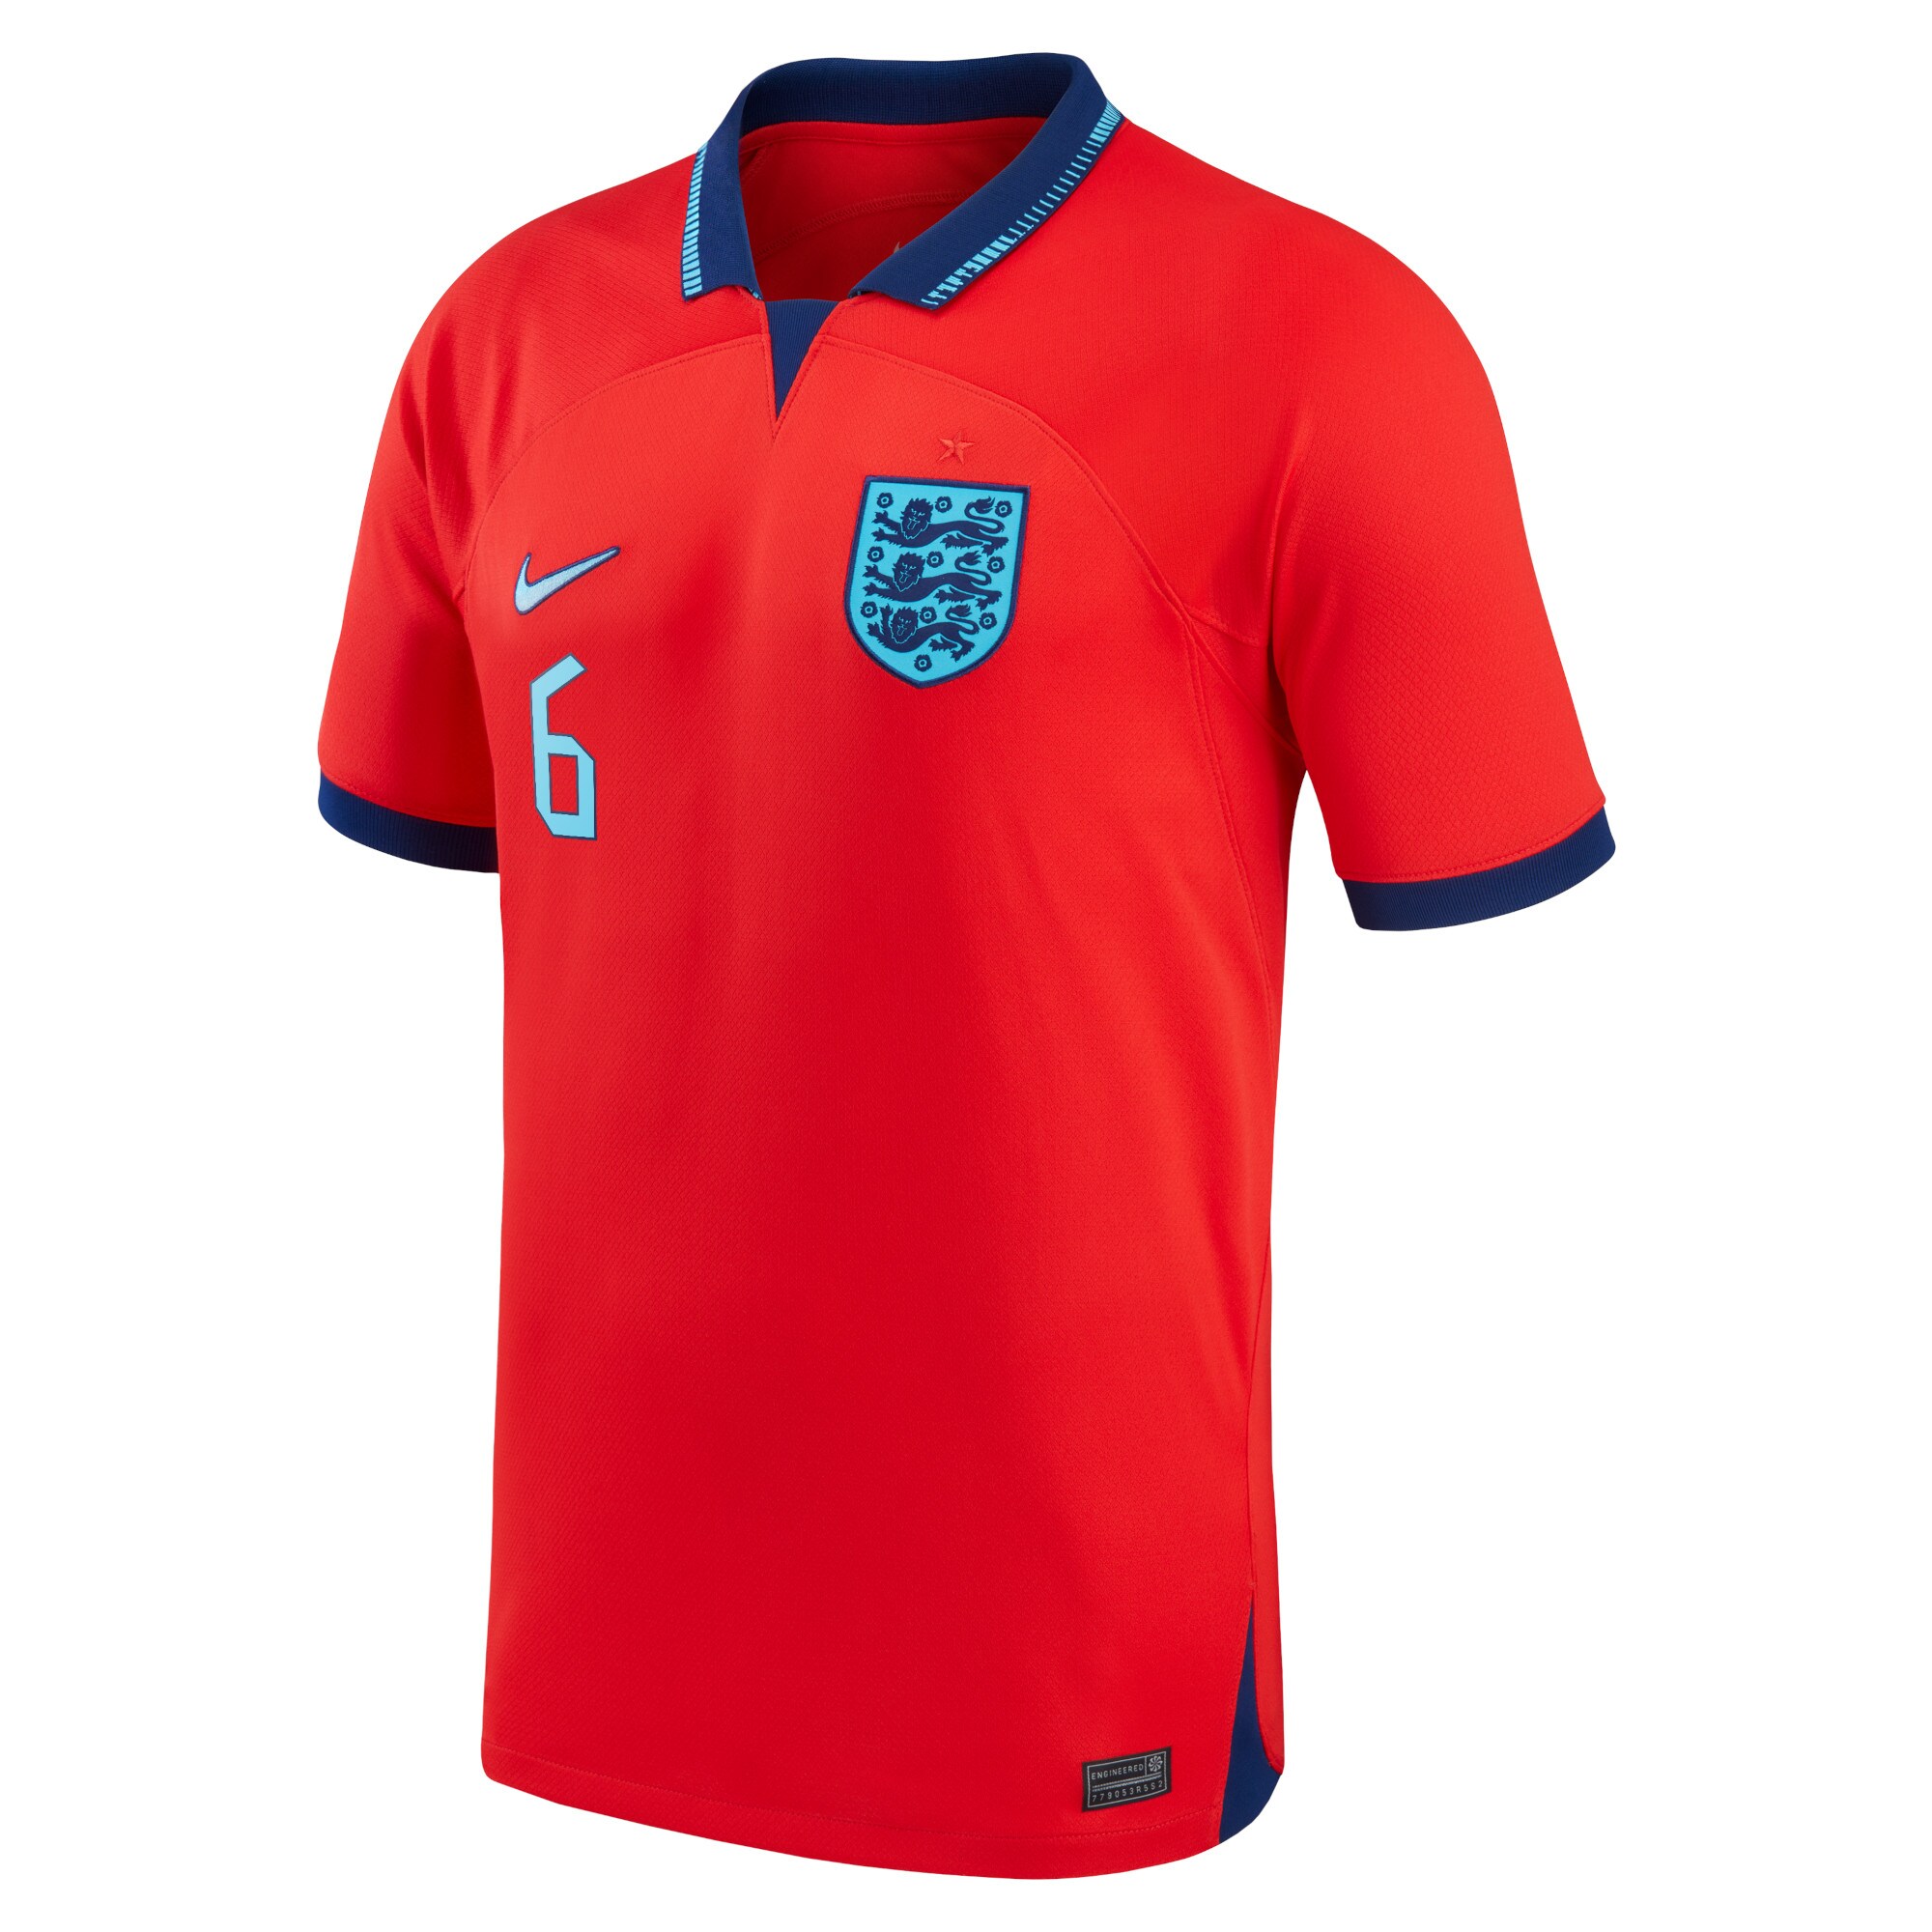 England Away Stadium Shirt 2022 with Maguire 6 printing